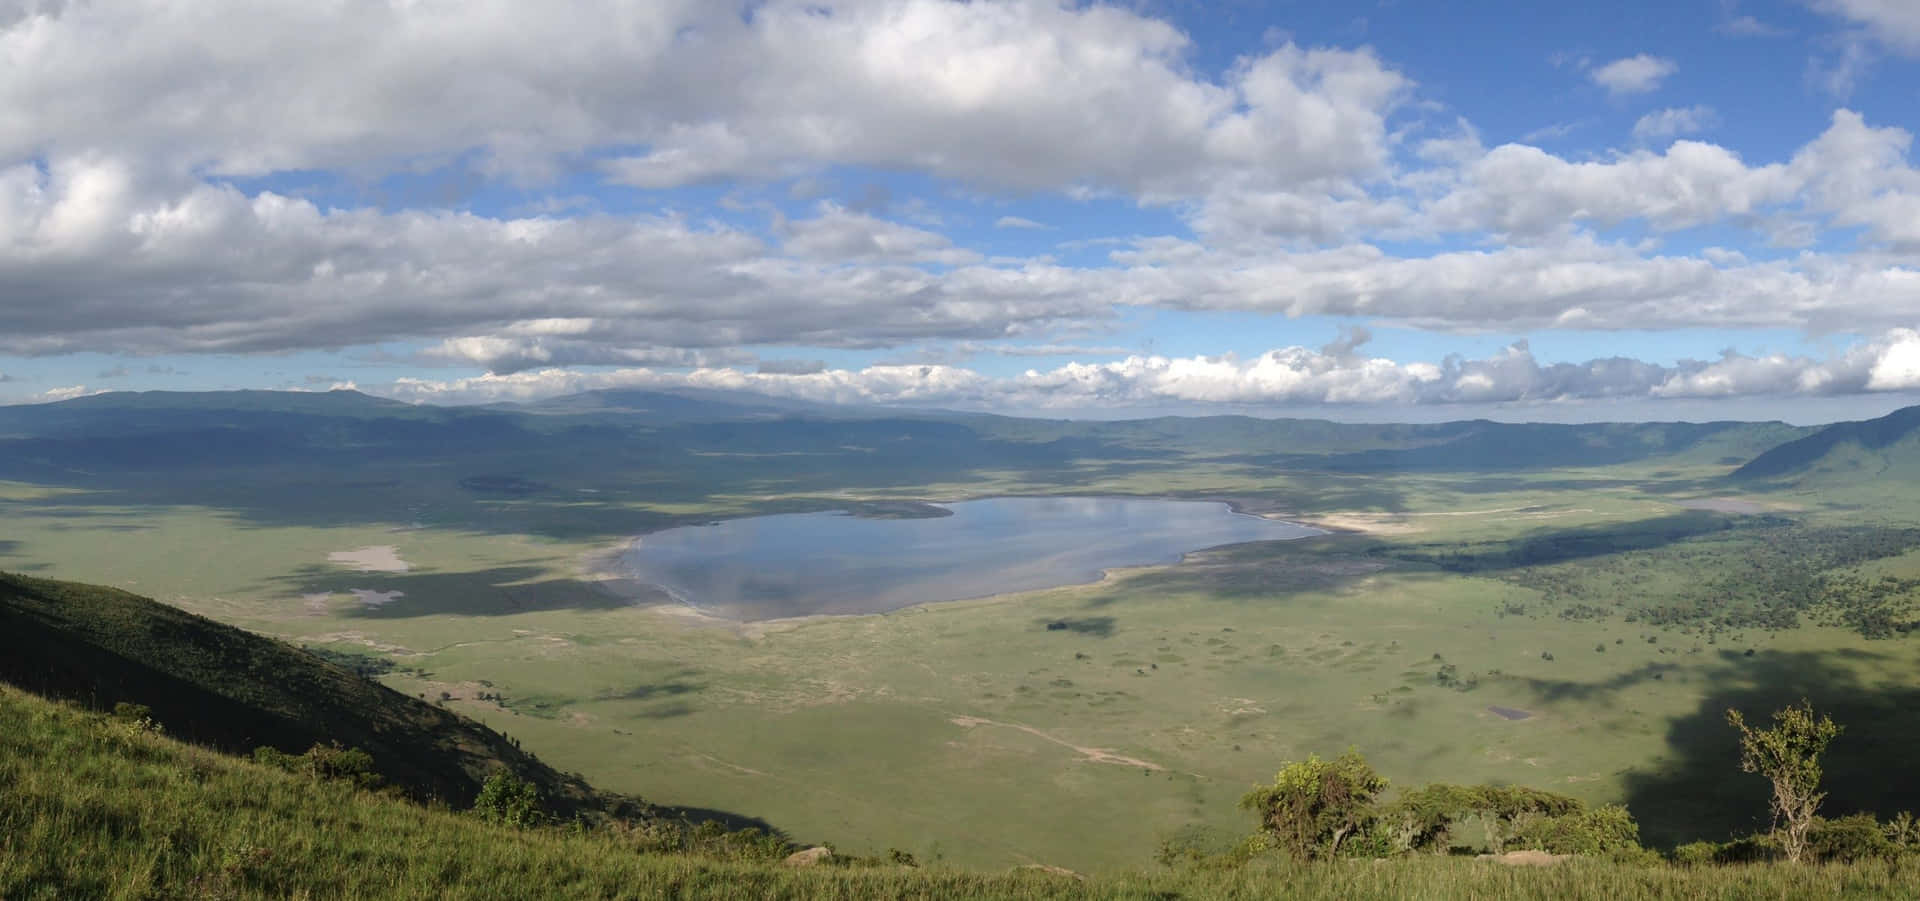 Fotografiaaerea Del Lago Magadi In Tanzania, Cratere Di Ngorongoro. Sfondo